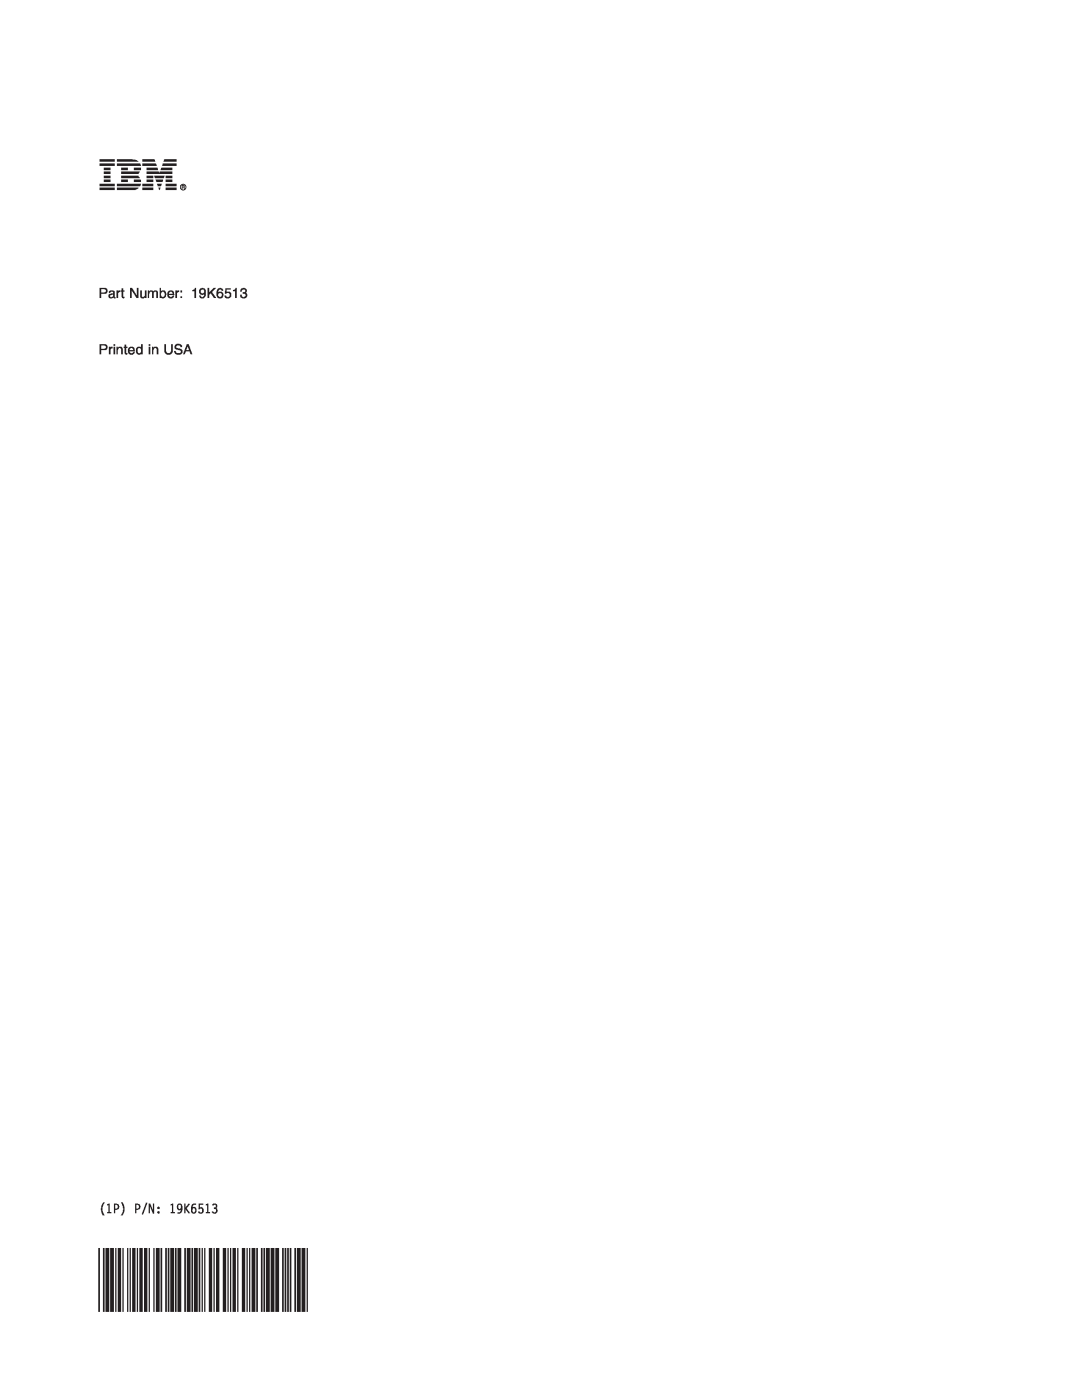 IBM 6643, 2179 manual Part Number 19K6513 Printed in USA, 1P P/N 19K6513 